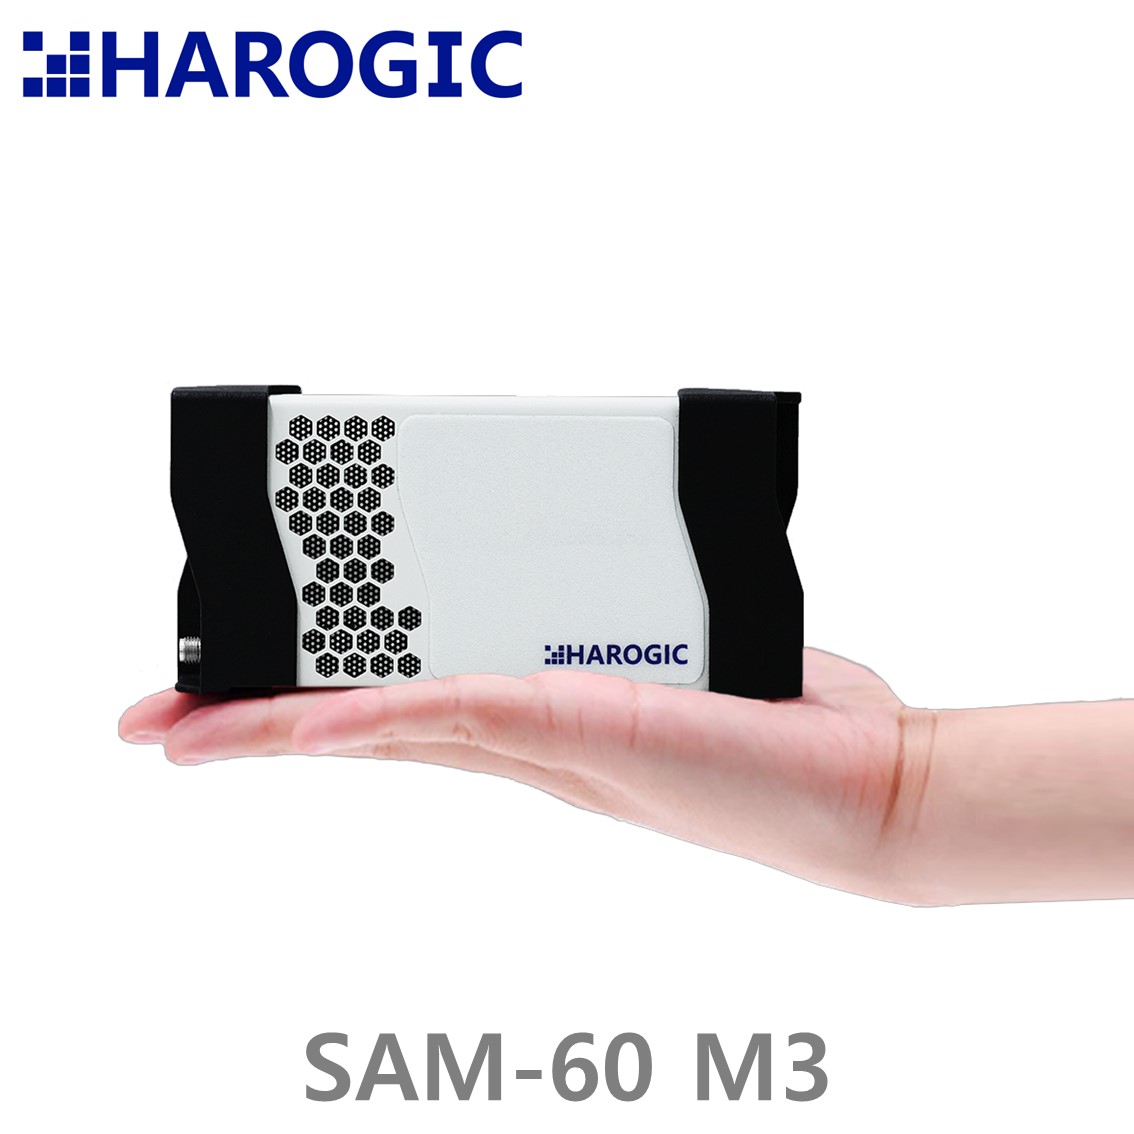 [ HAROGIC ] SAM-60 M3, USB 초소형 리얼타임 스펙트럼분석기 9 kHz - 6.3 GHz, 100MHz 대역폭, 300GHz/s sweep speed, USB3.0